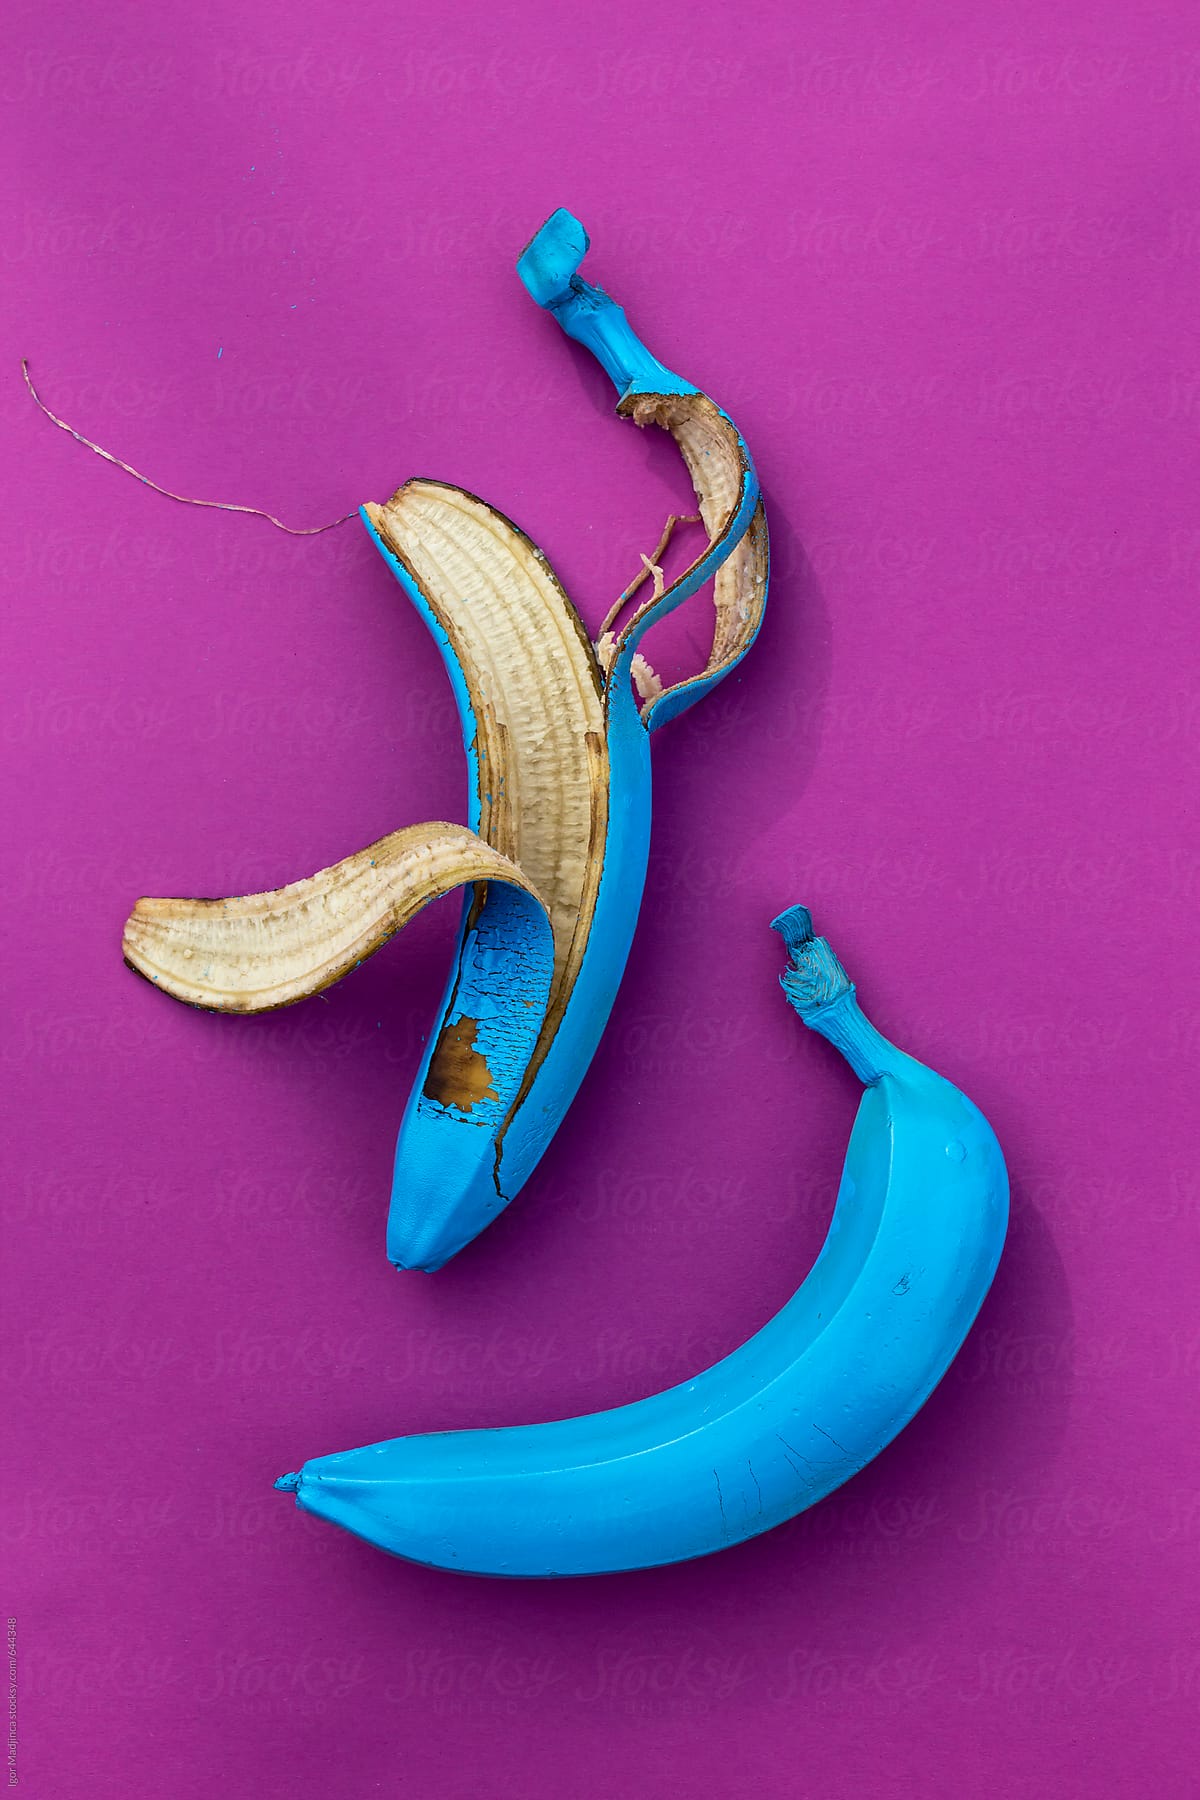 Blue Banana And Peel Bananas On Purple Background by Stocksy Contributor  Igor Madjinca - Stocksy